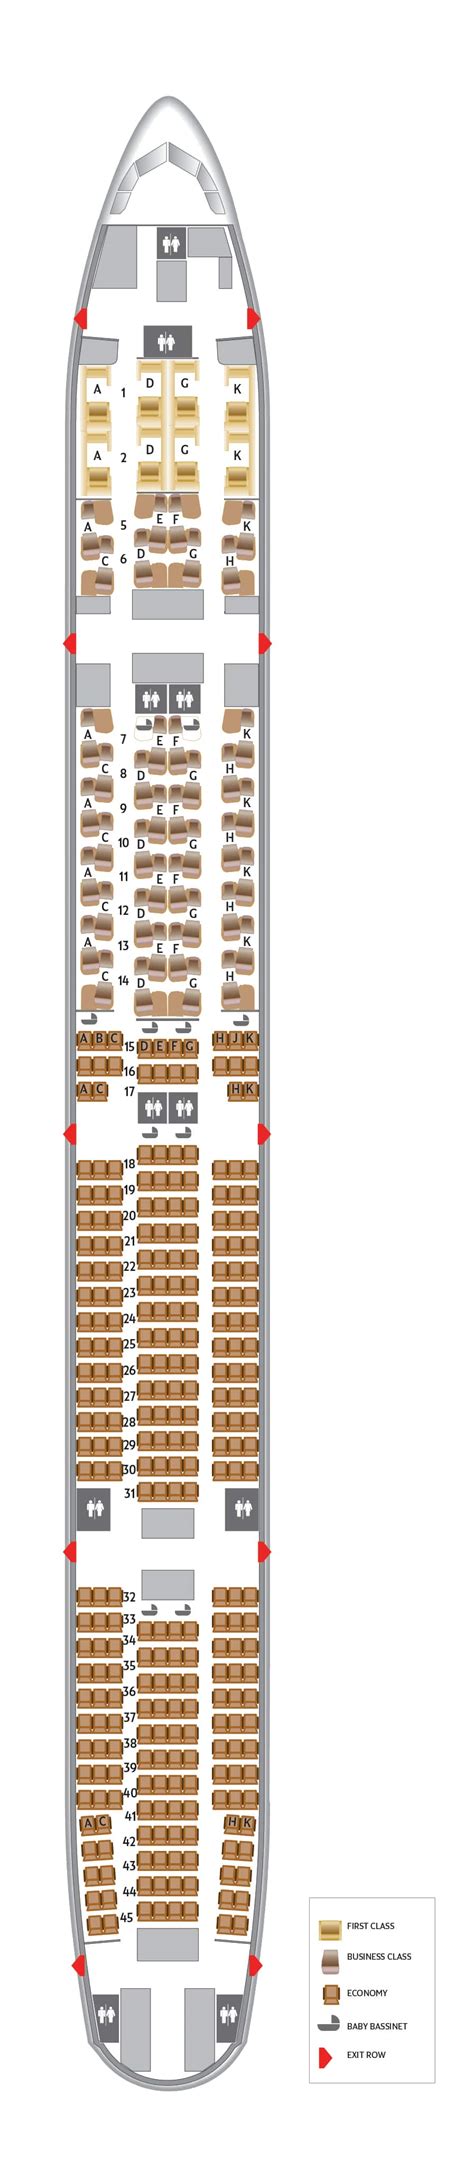 787 Dreamliner Seating Plan Etihad Elcho Table